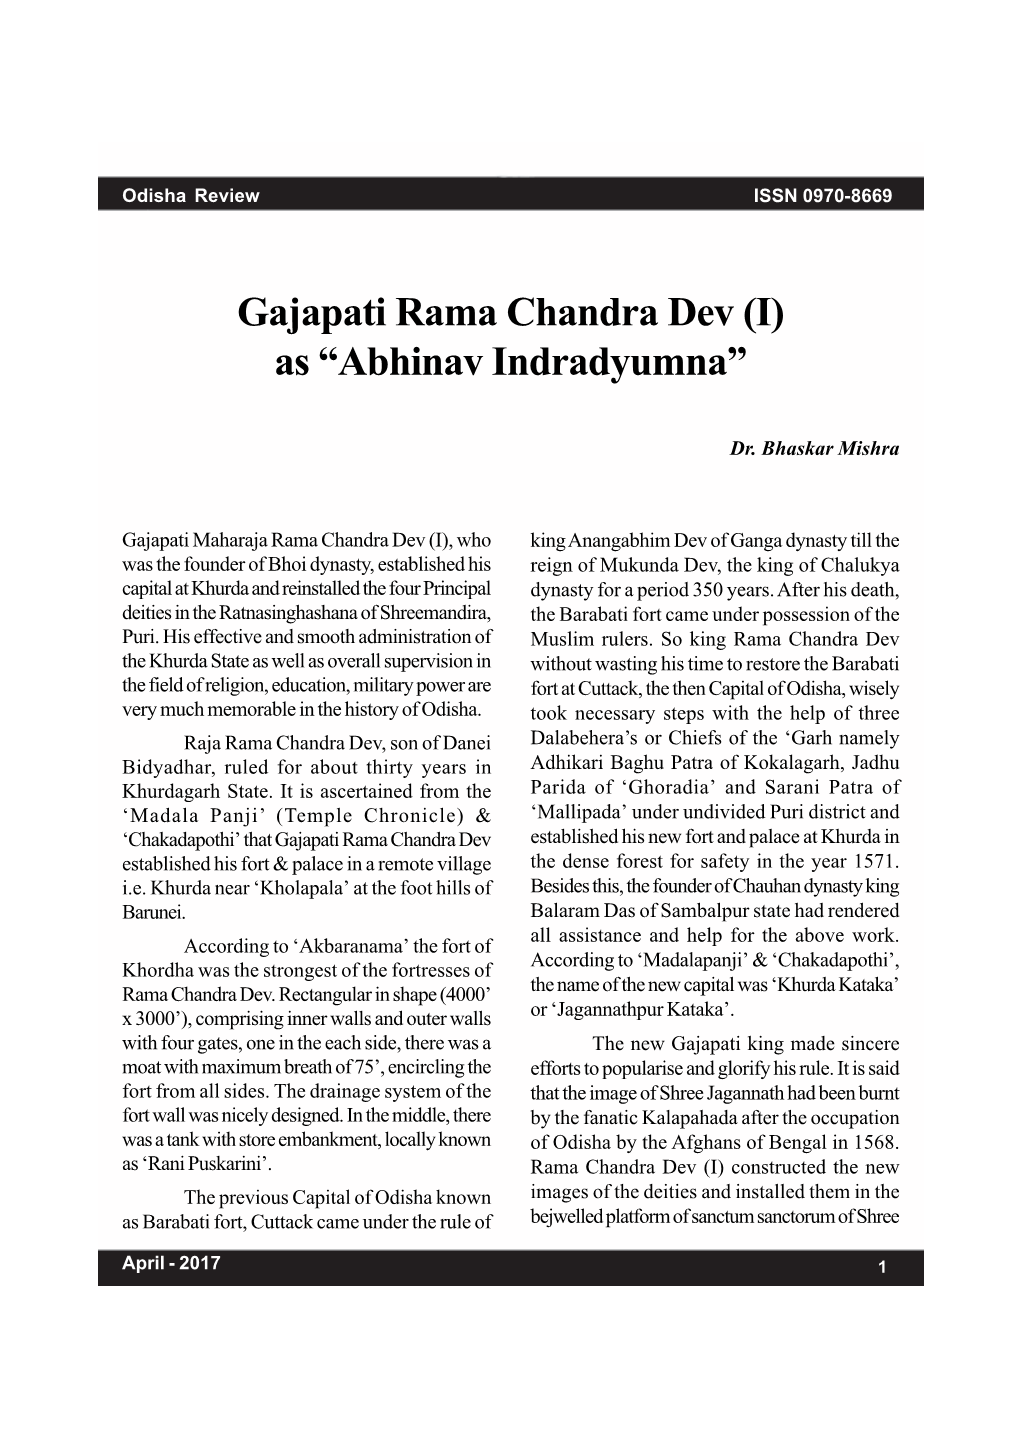 Gajapati Rama Chandra Dev (I) As “Abhinav Indradyumna”